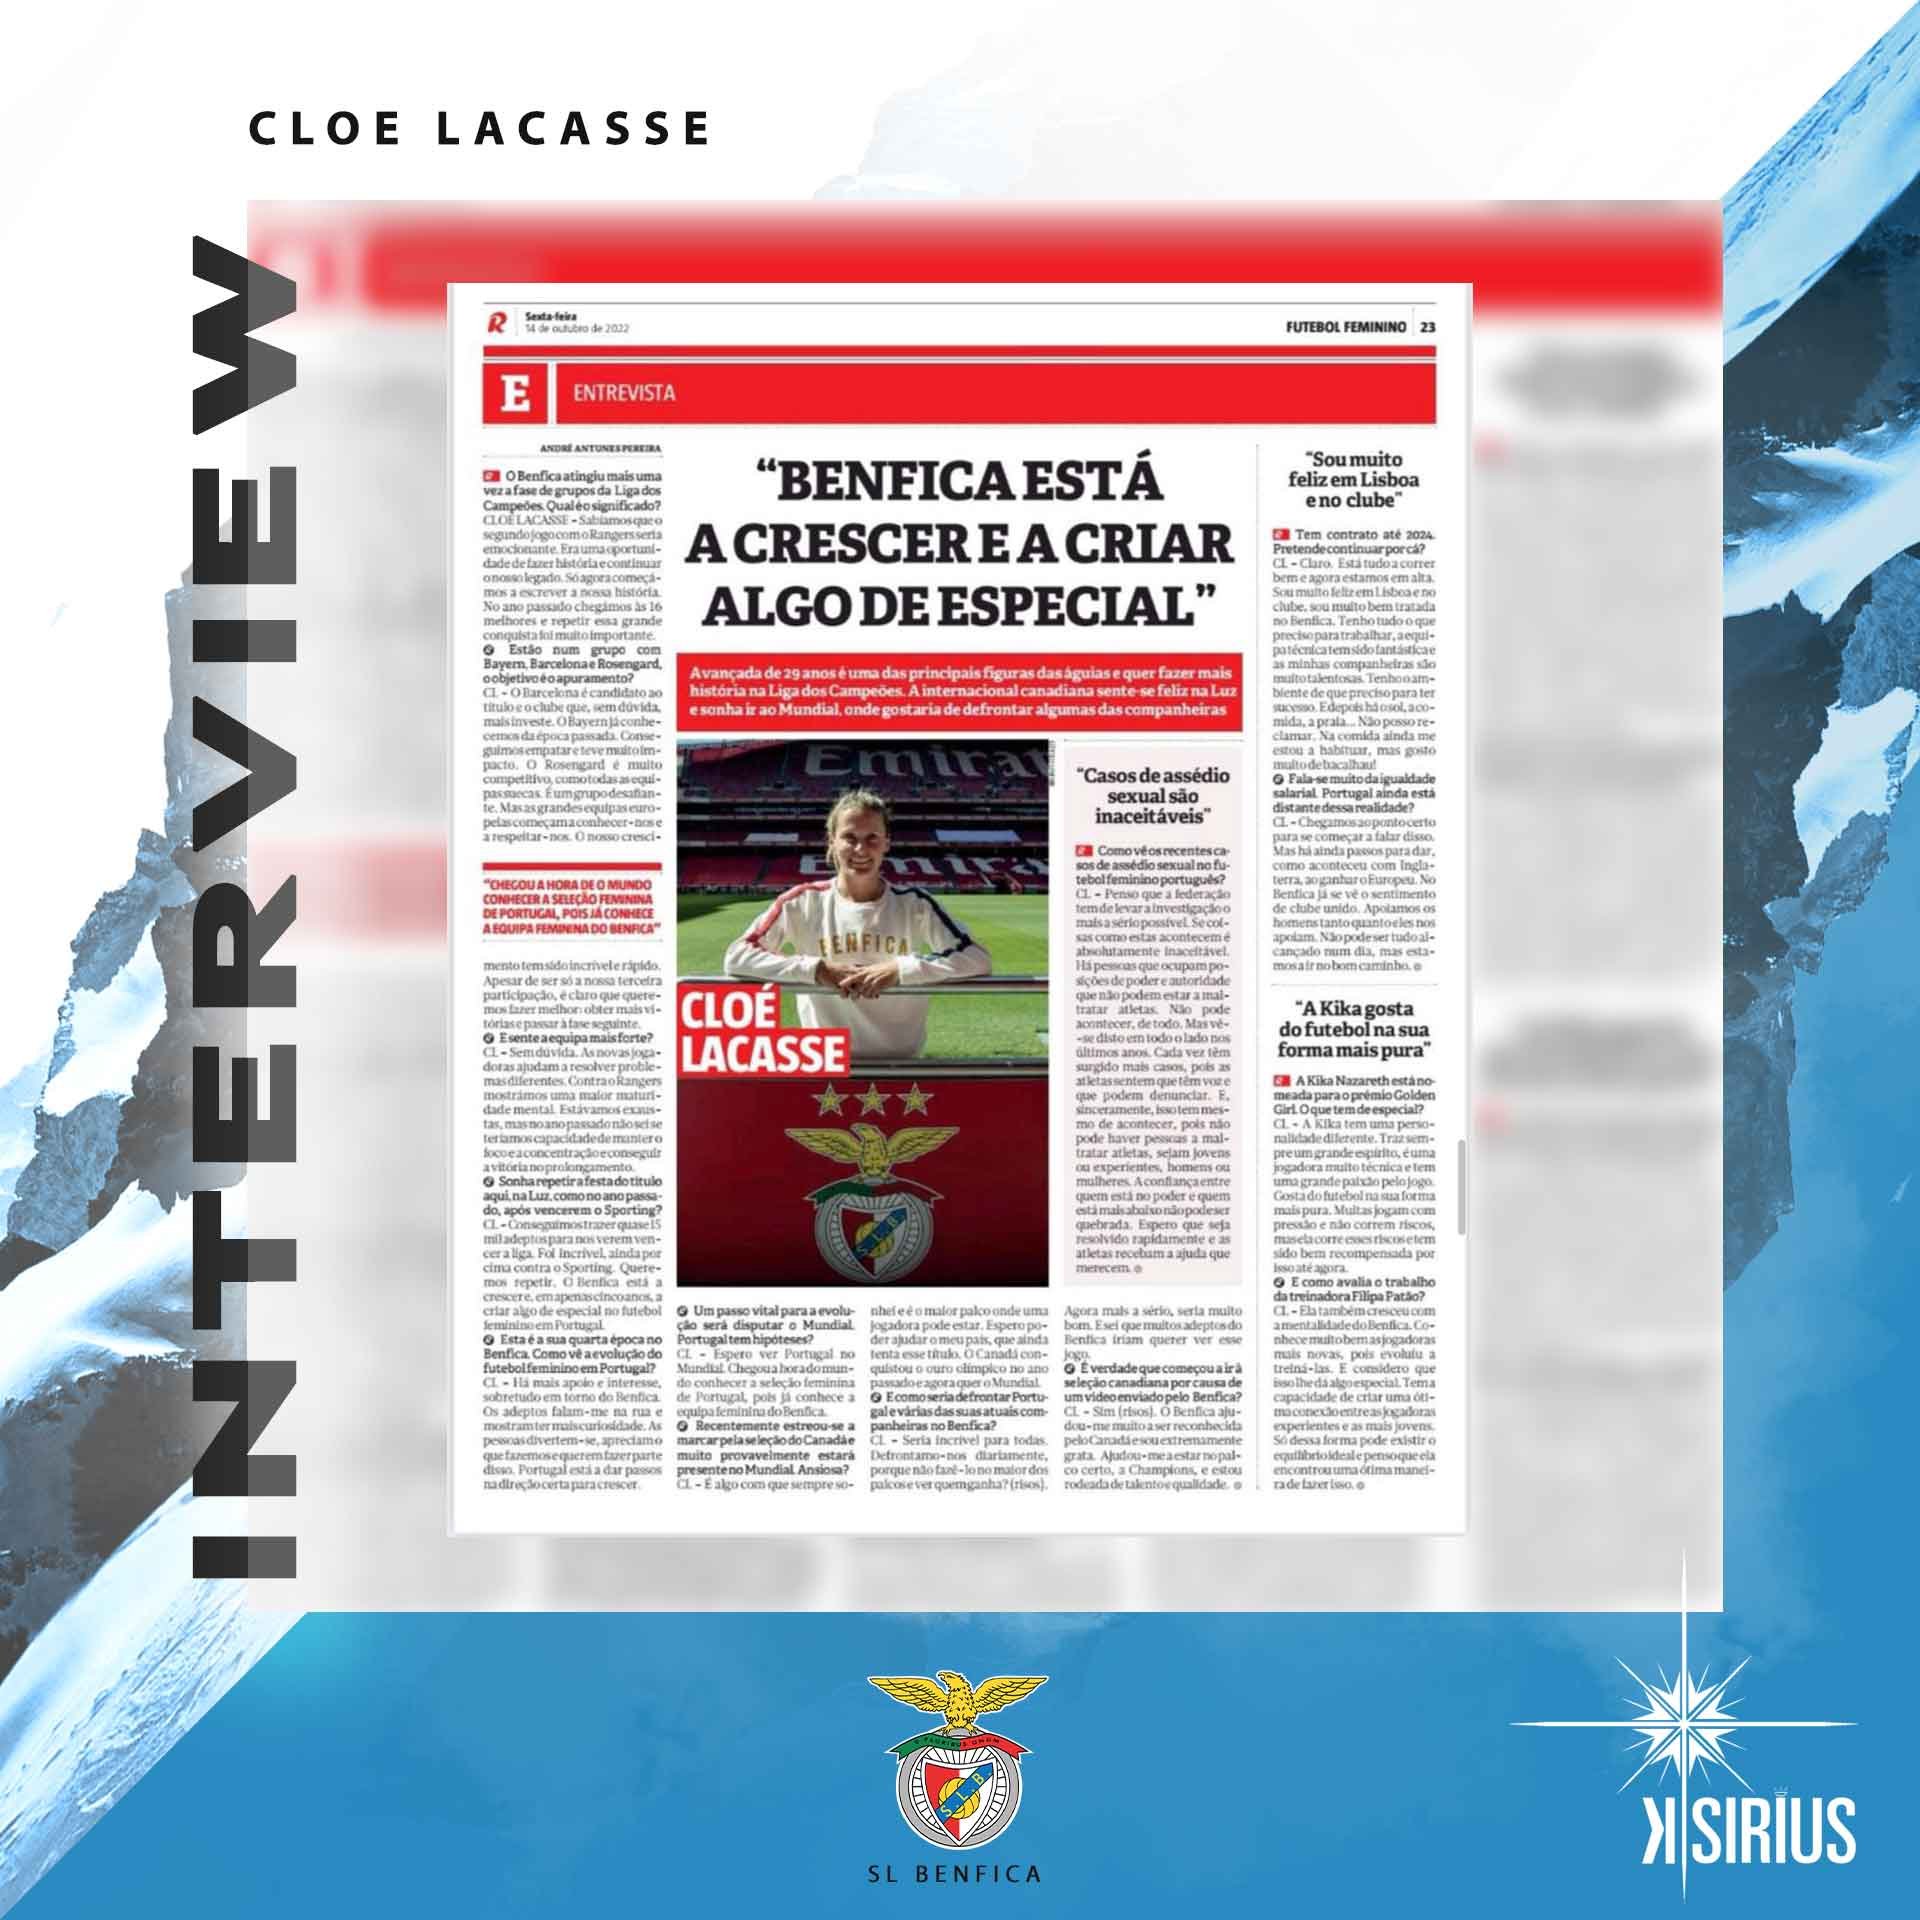 Interview: Cloé Lacasse (SL Benfica)